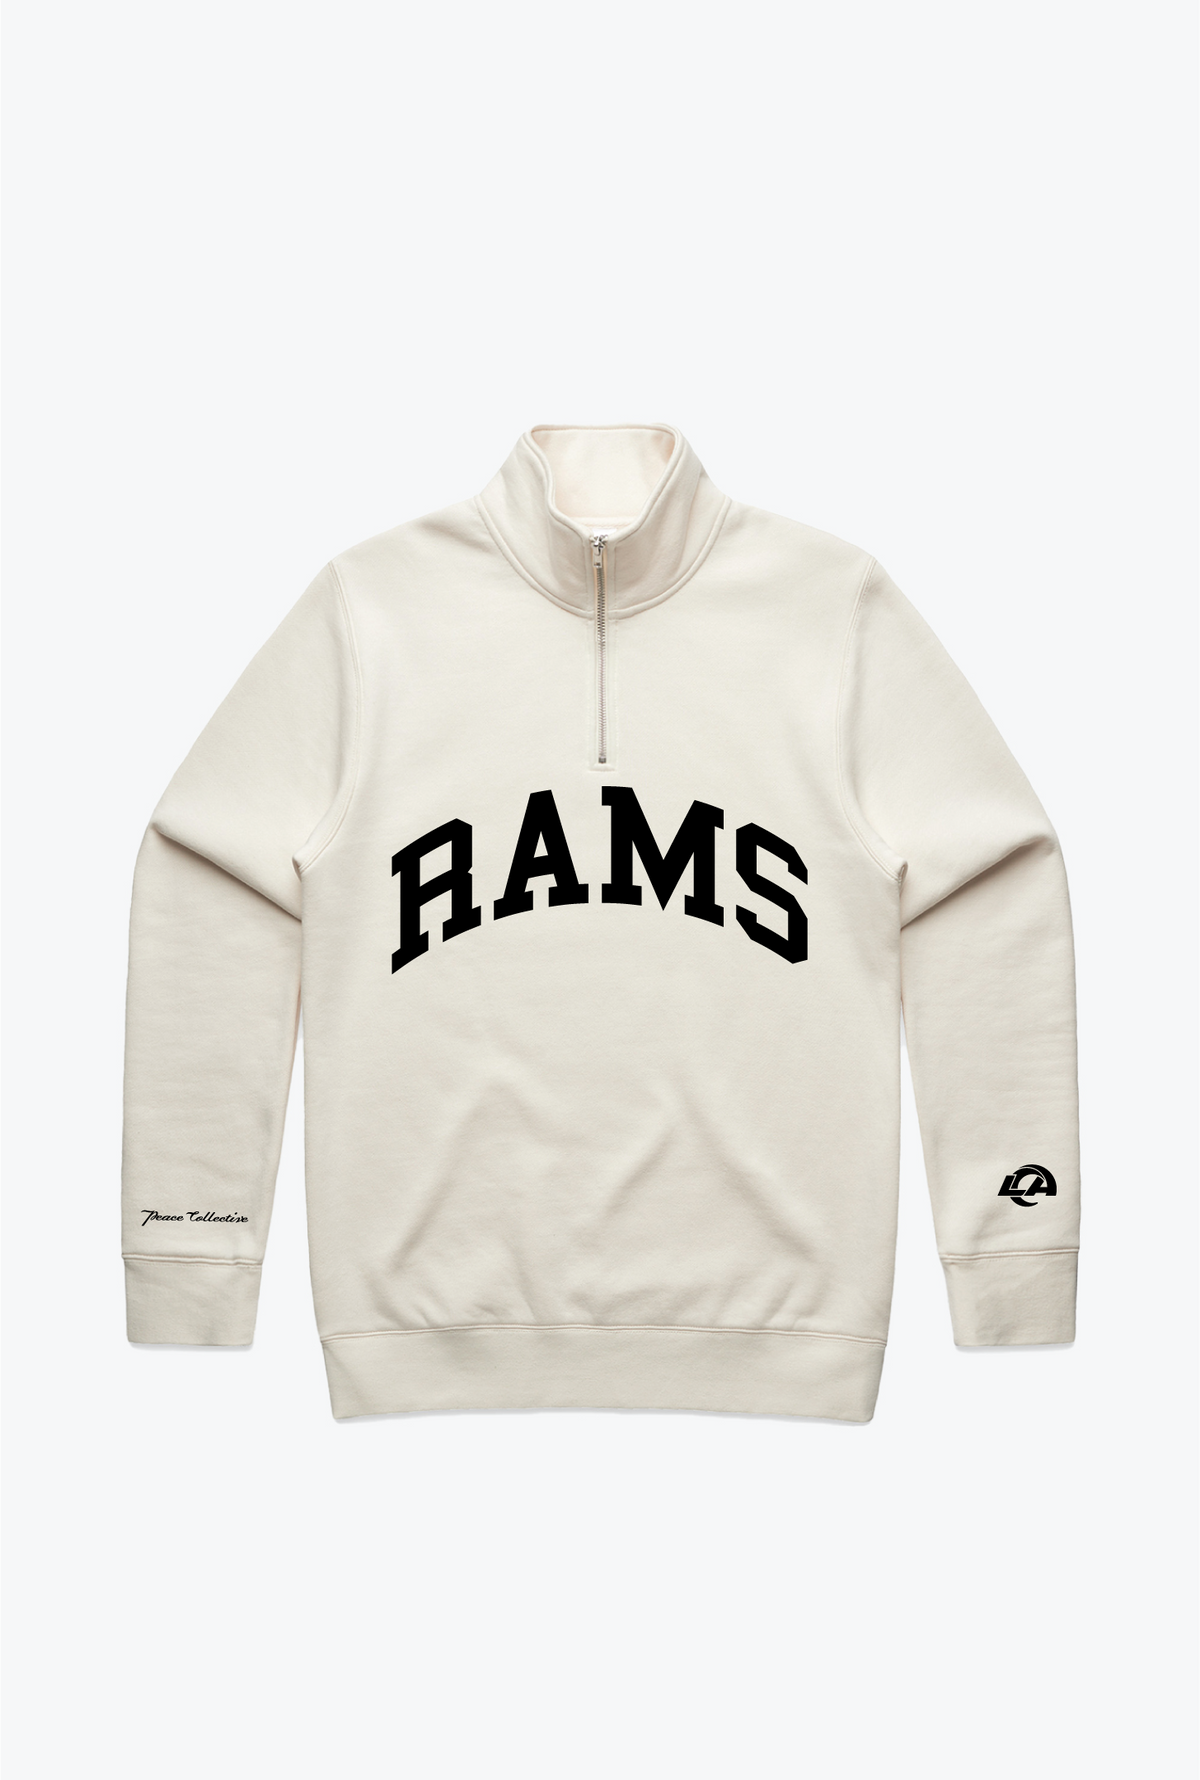 Los Angeles Rams Collegiate Quarter Zip - Ivory